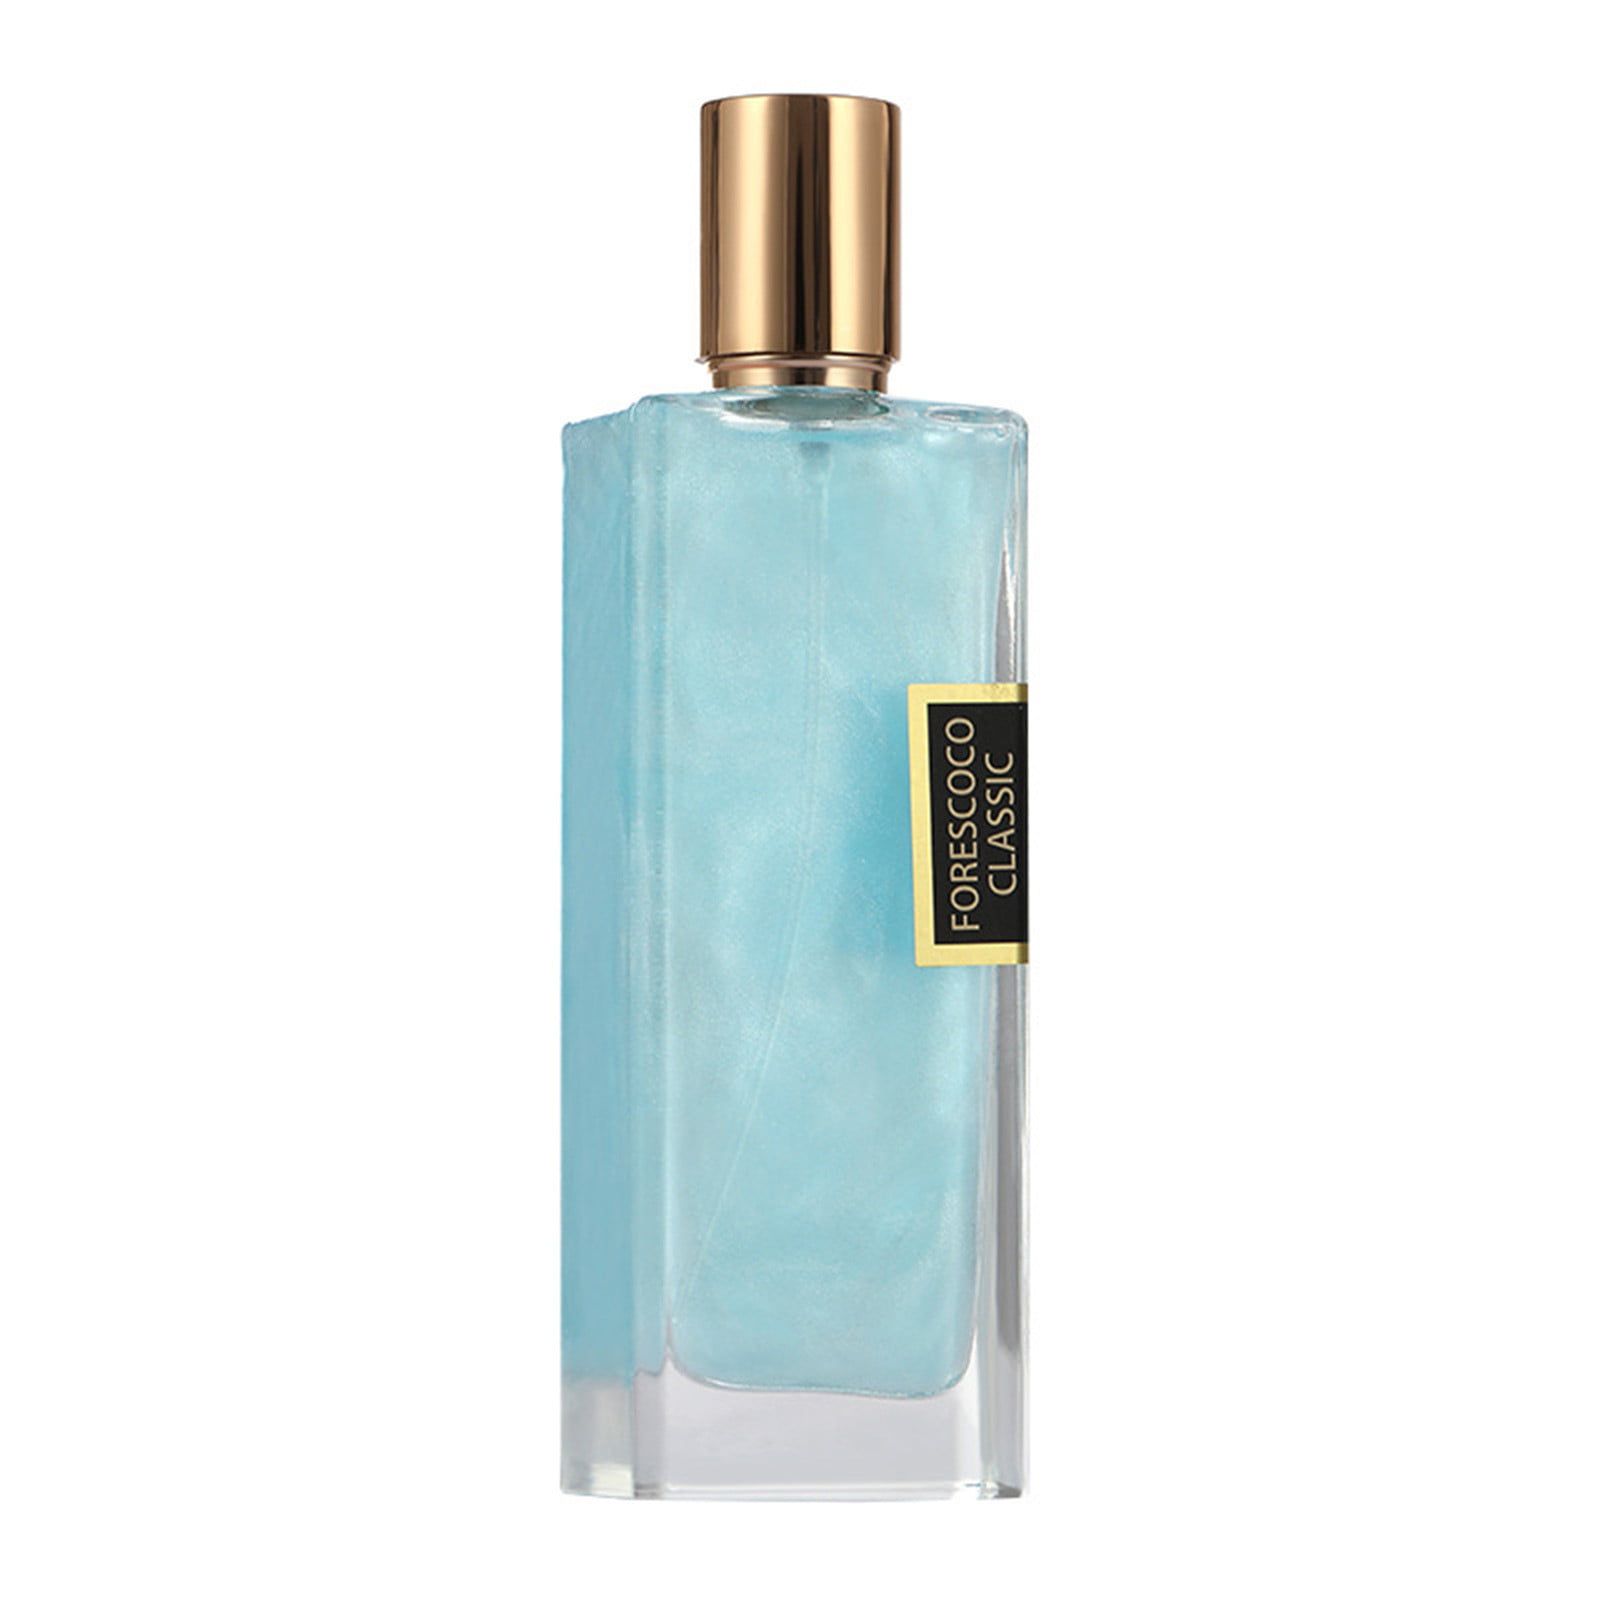 Perfume For Ladies Long-lasting Perfume, Quicksand Perfume Body